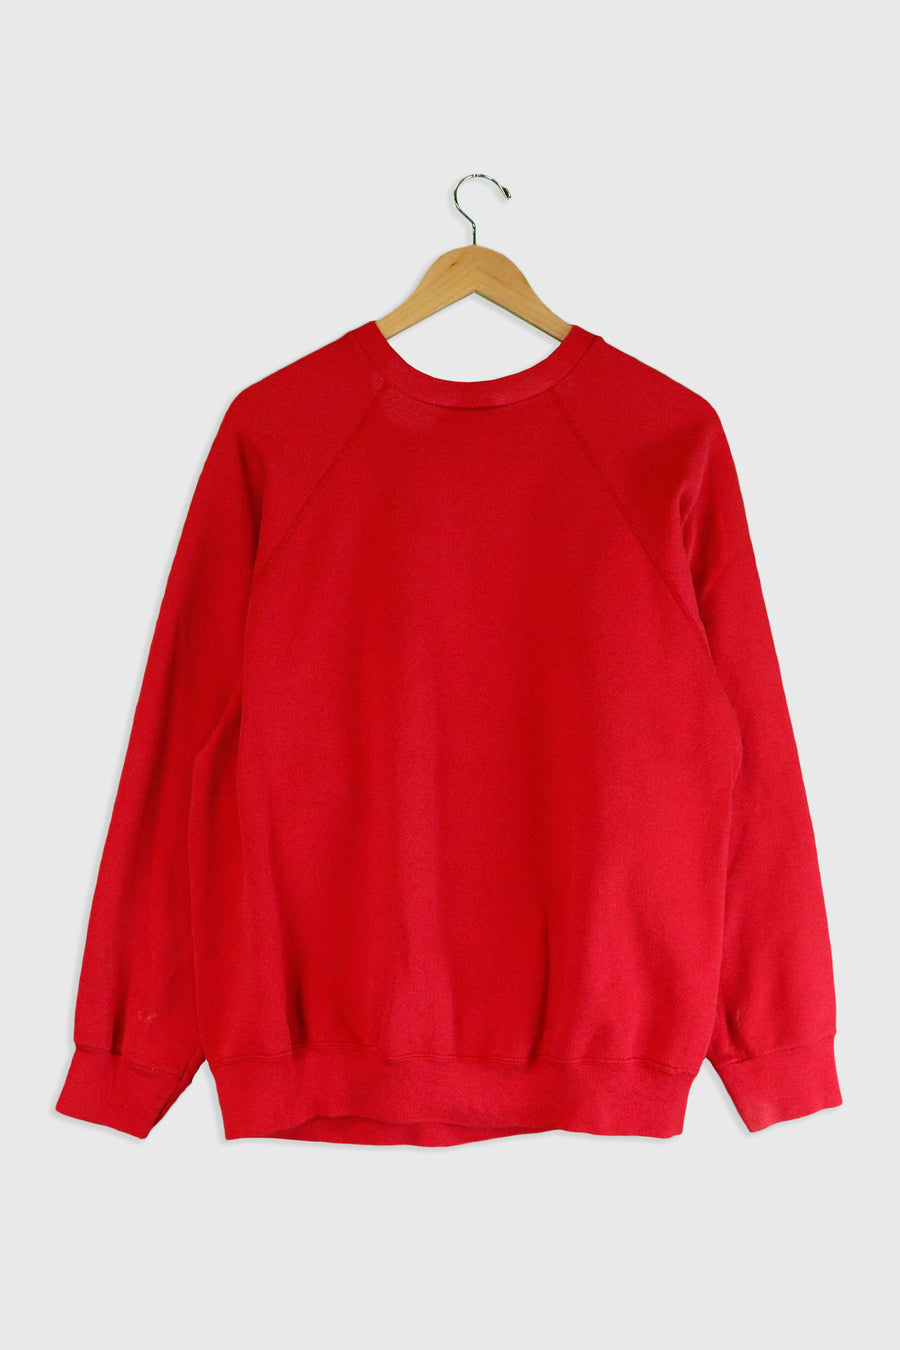 Vintage University Norway 'SIC SEMPER LVEFISK' Sweatshirt Sz XL